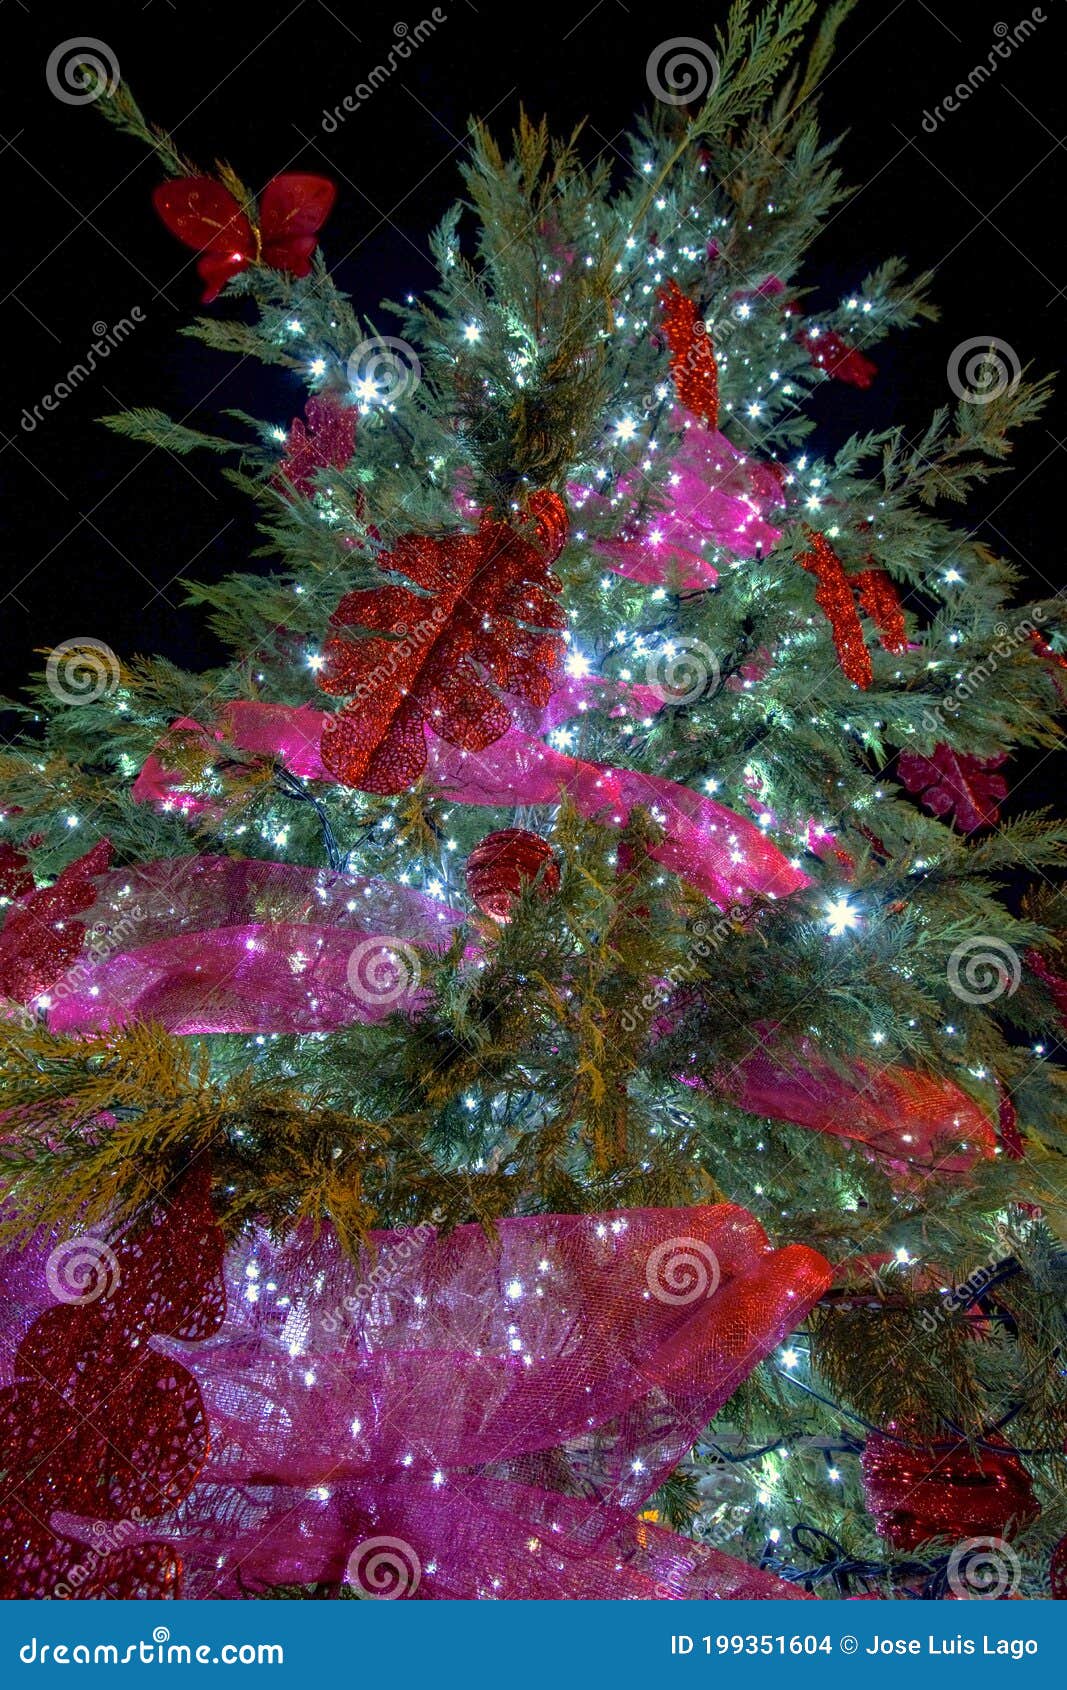 luces decorativas navideÃÂ±as en abeto, adornando y creando ambiente festivo